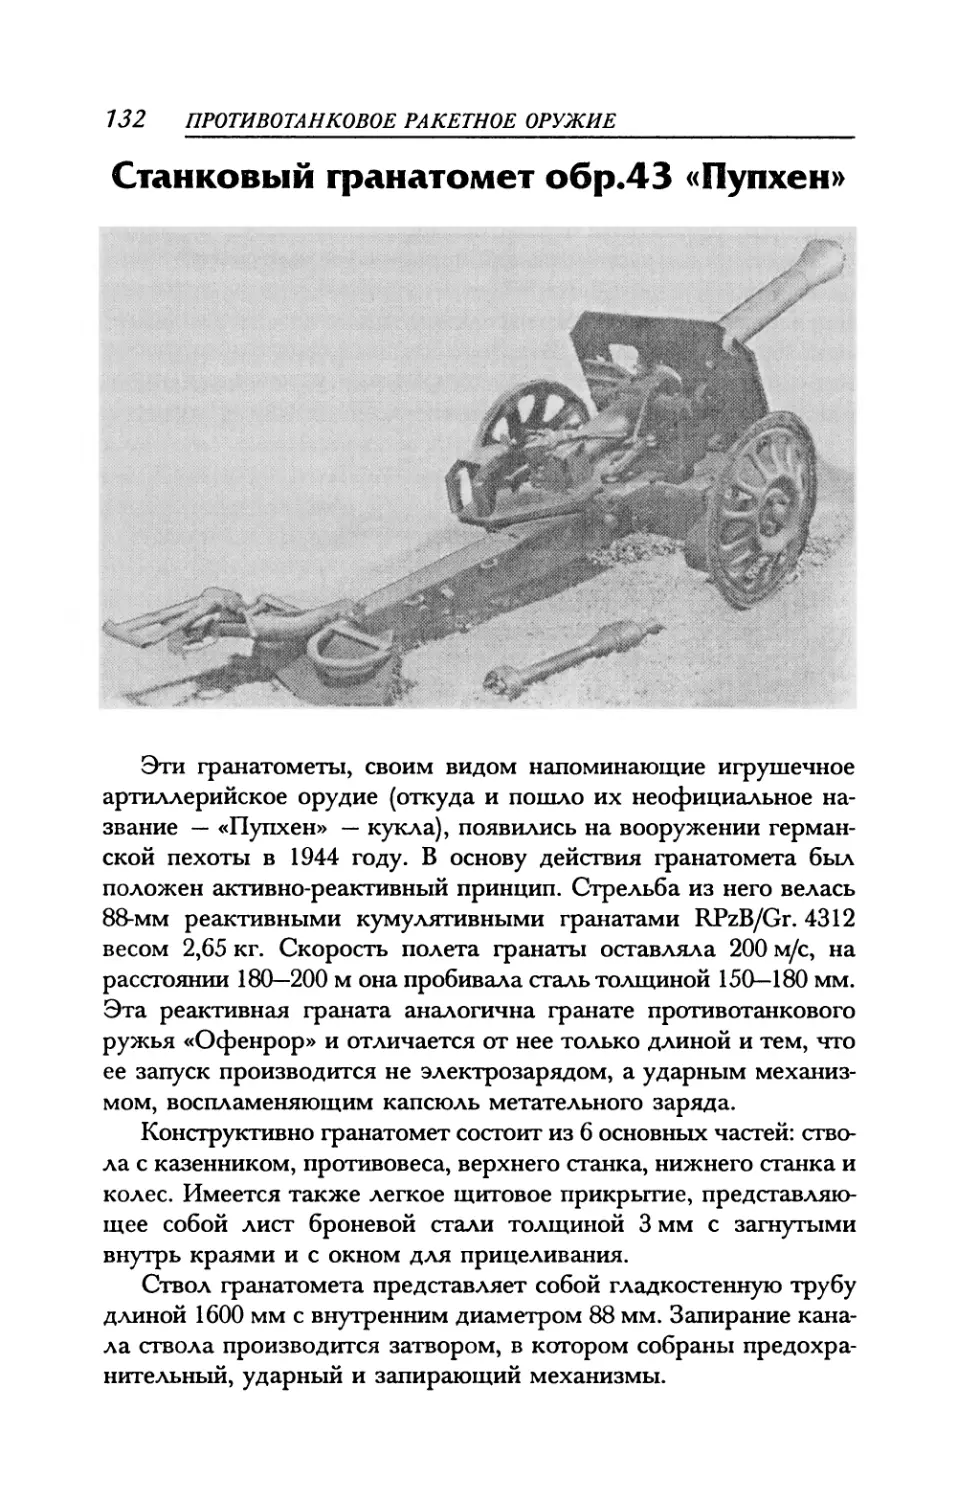 Станковый гранатомет обр.43 «Пупхен»